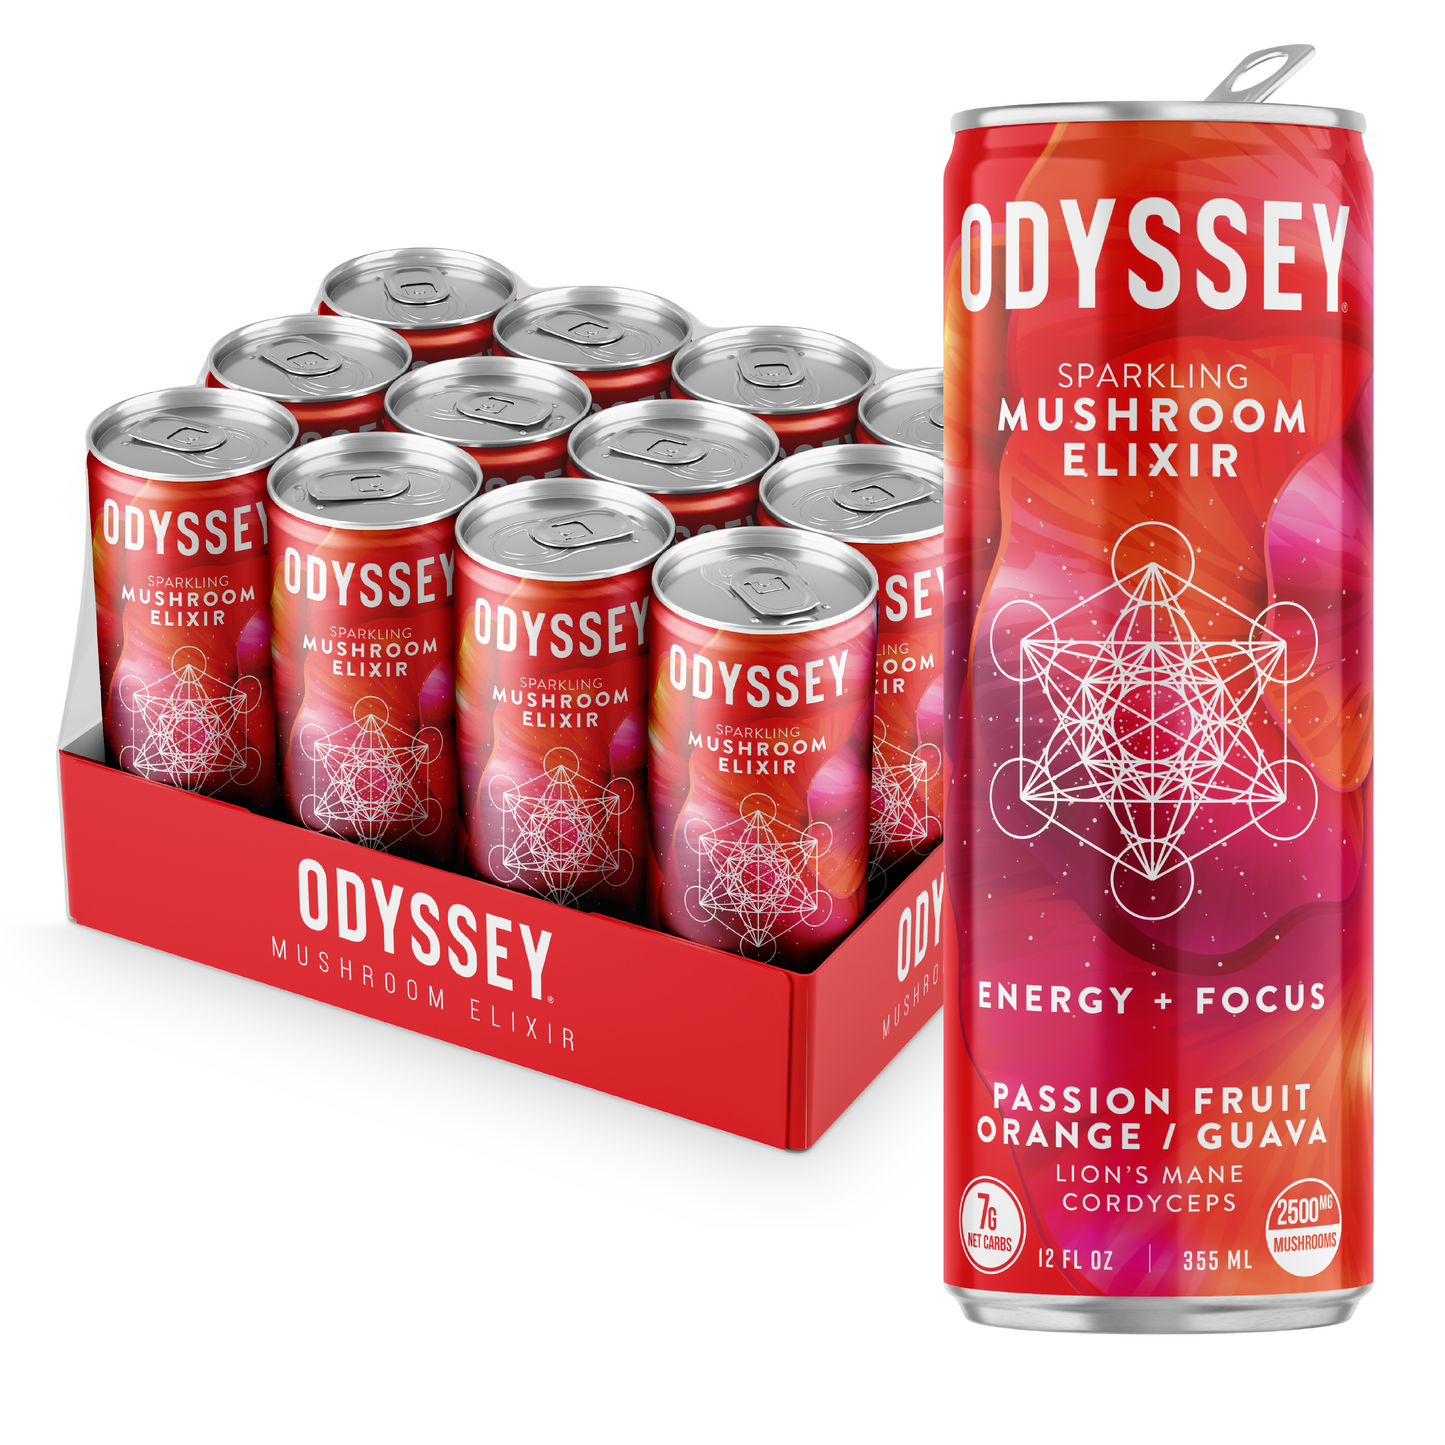 OdysseyElixir - ENERGY + FOCUS - PASSION FRUIT, ORANGE, GUAVA - 12-pack